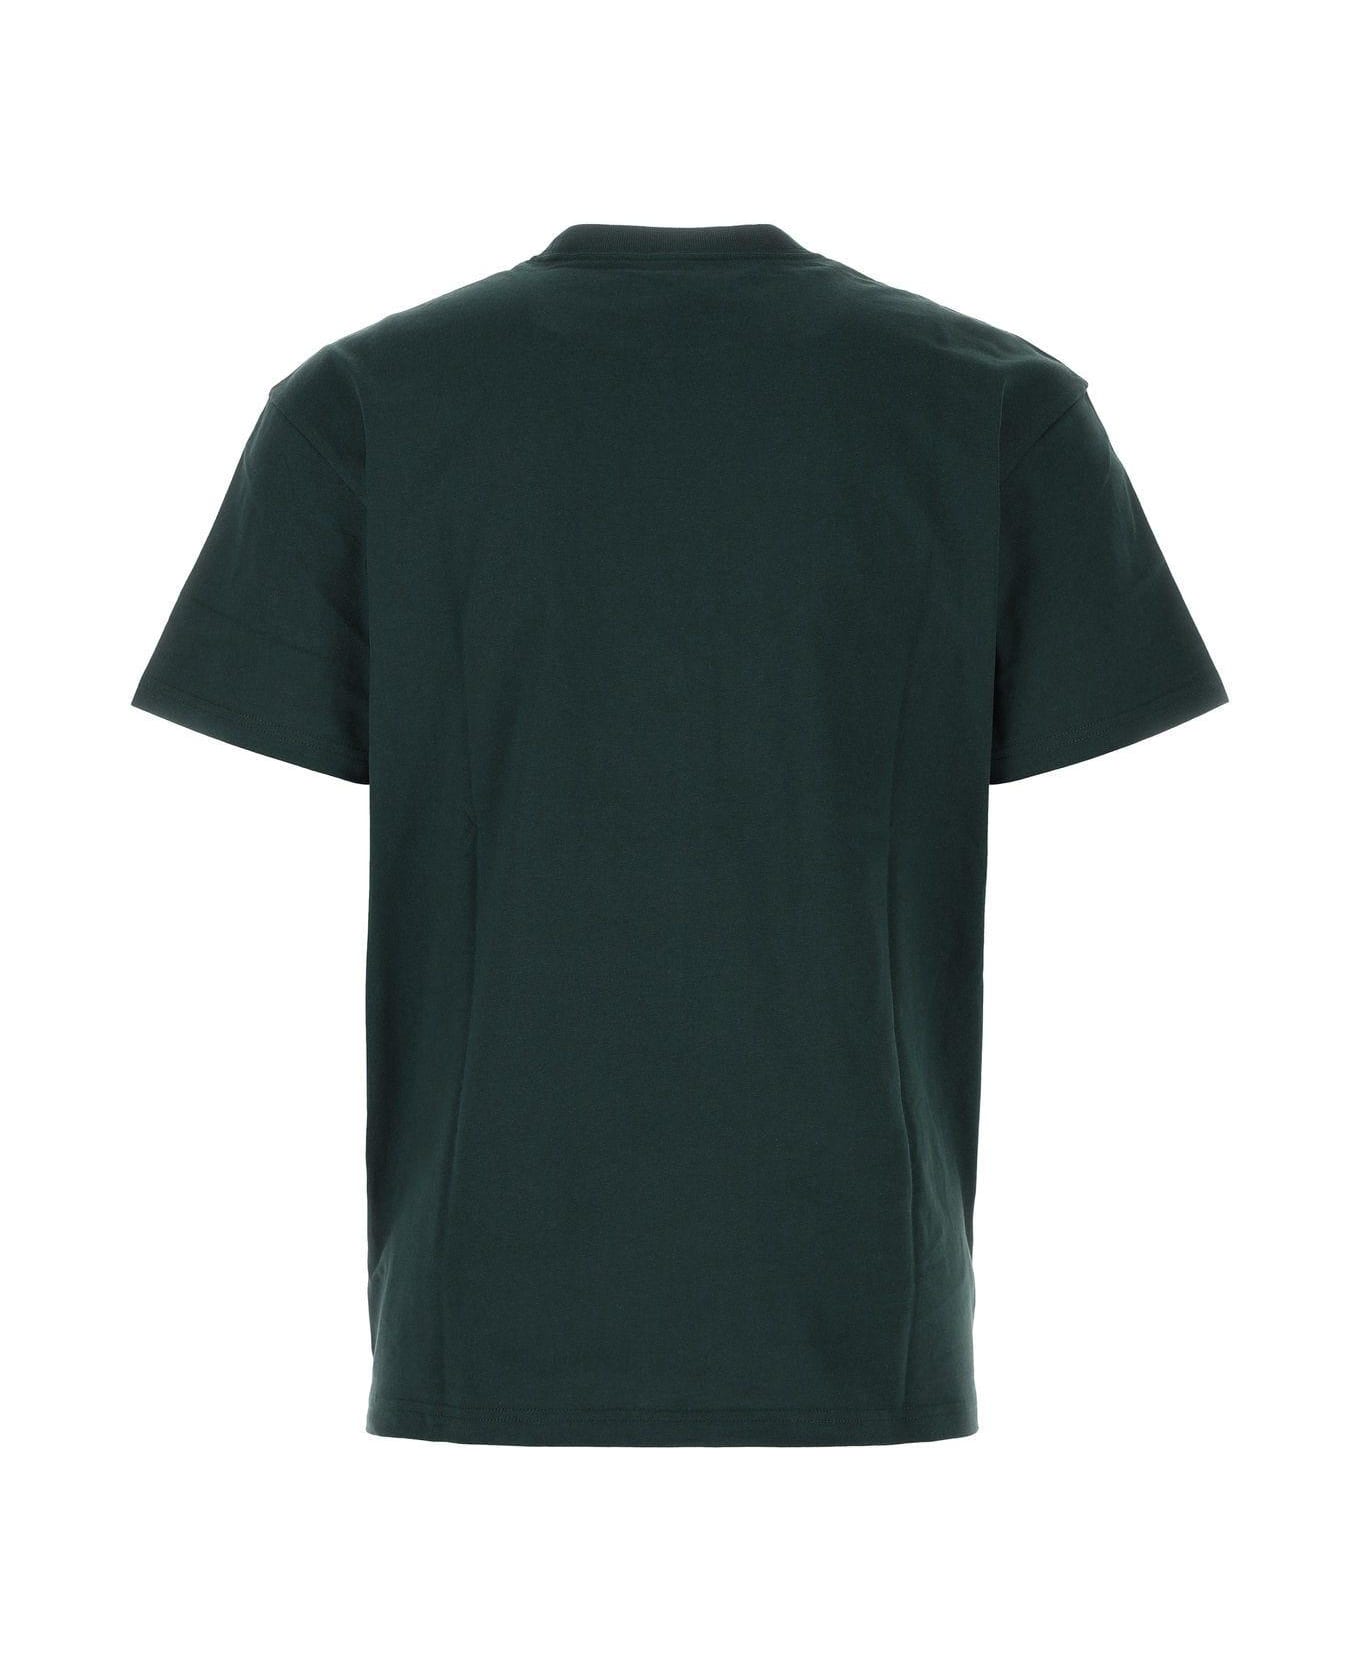 Carhartt Bottle Green Cotton S/s Chase T-shirt - Grxx Botanic Gold